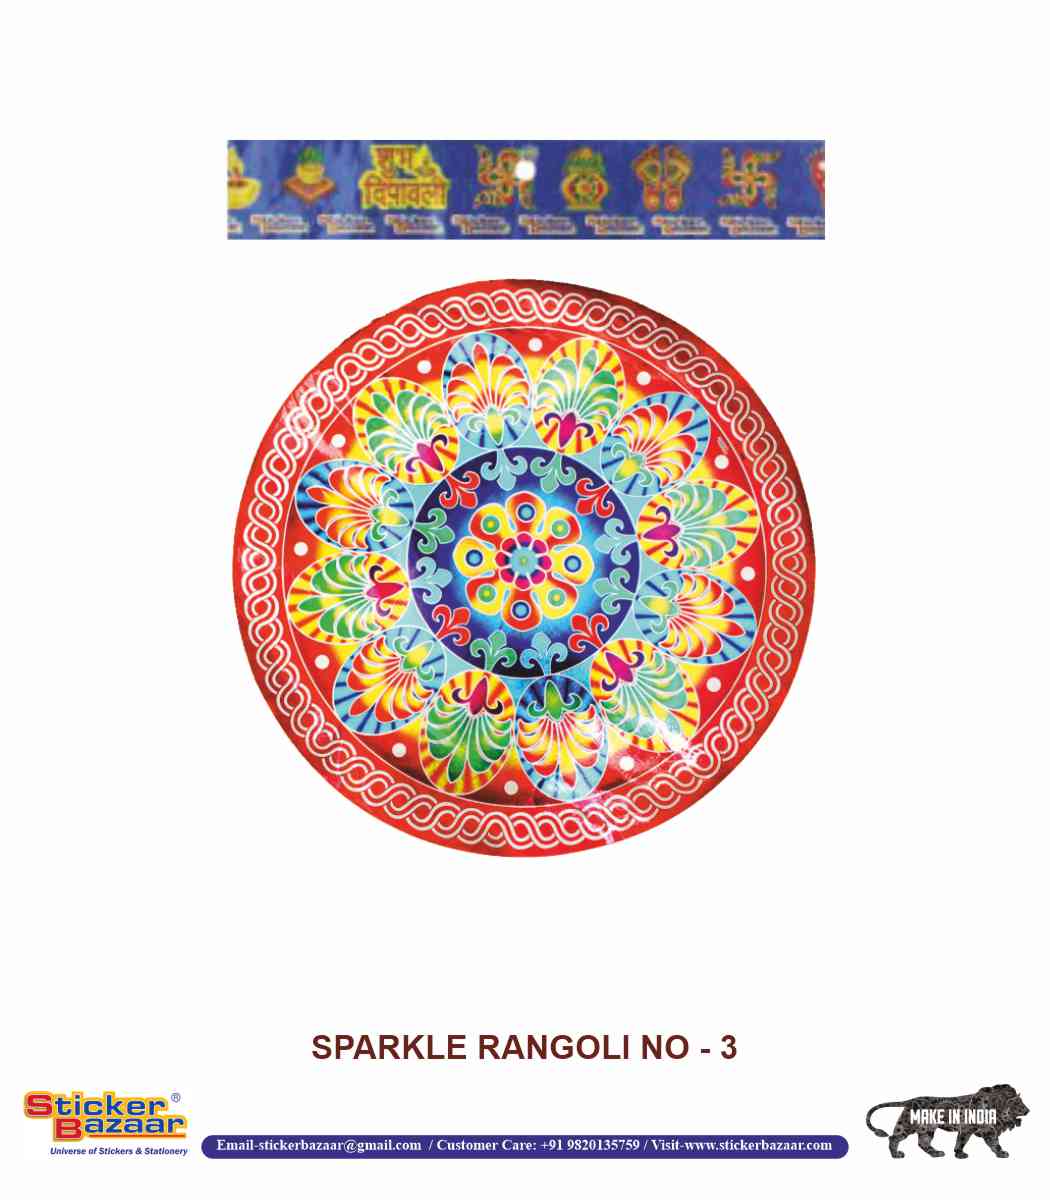 Sticker Bazaar Holo Rangoli SR3 with Header